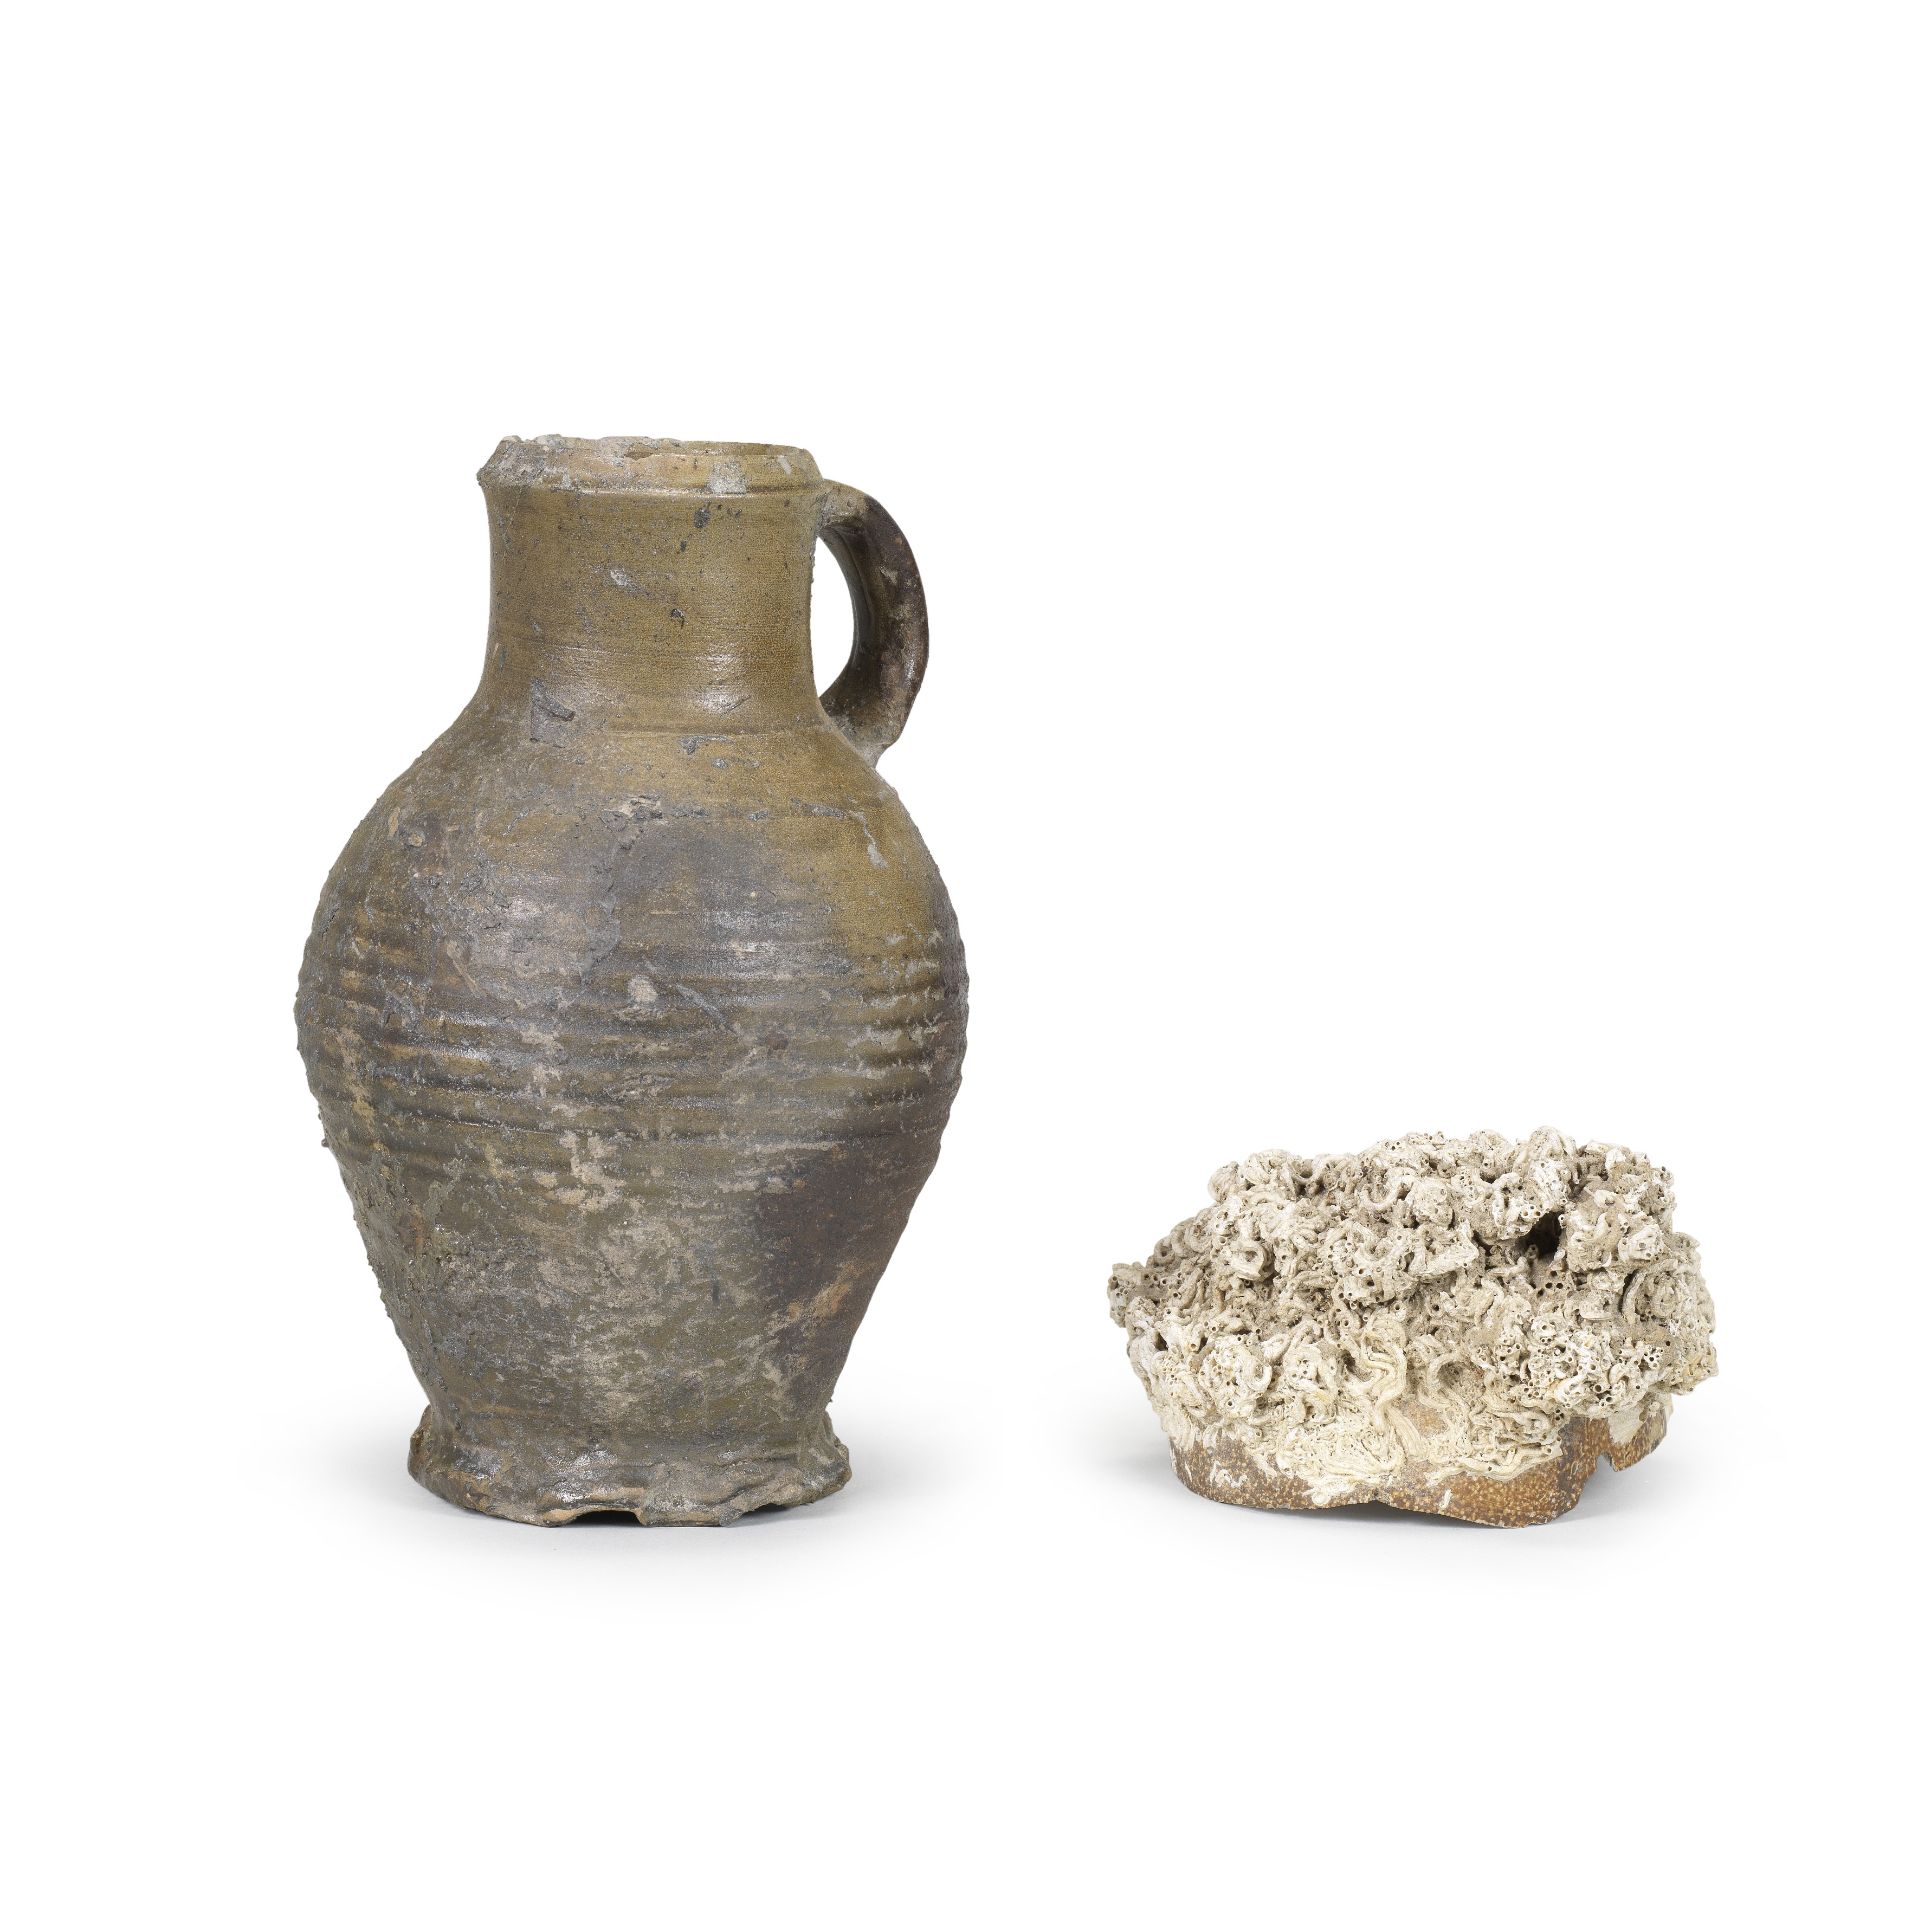 A Rhineland stoneware jug together with an encrusted stoneware shard 15th Century